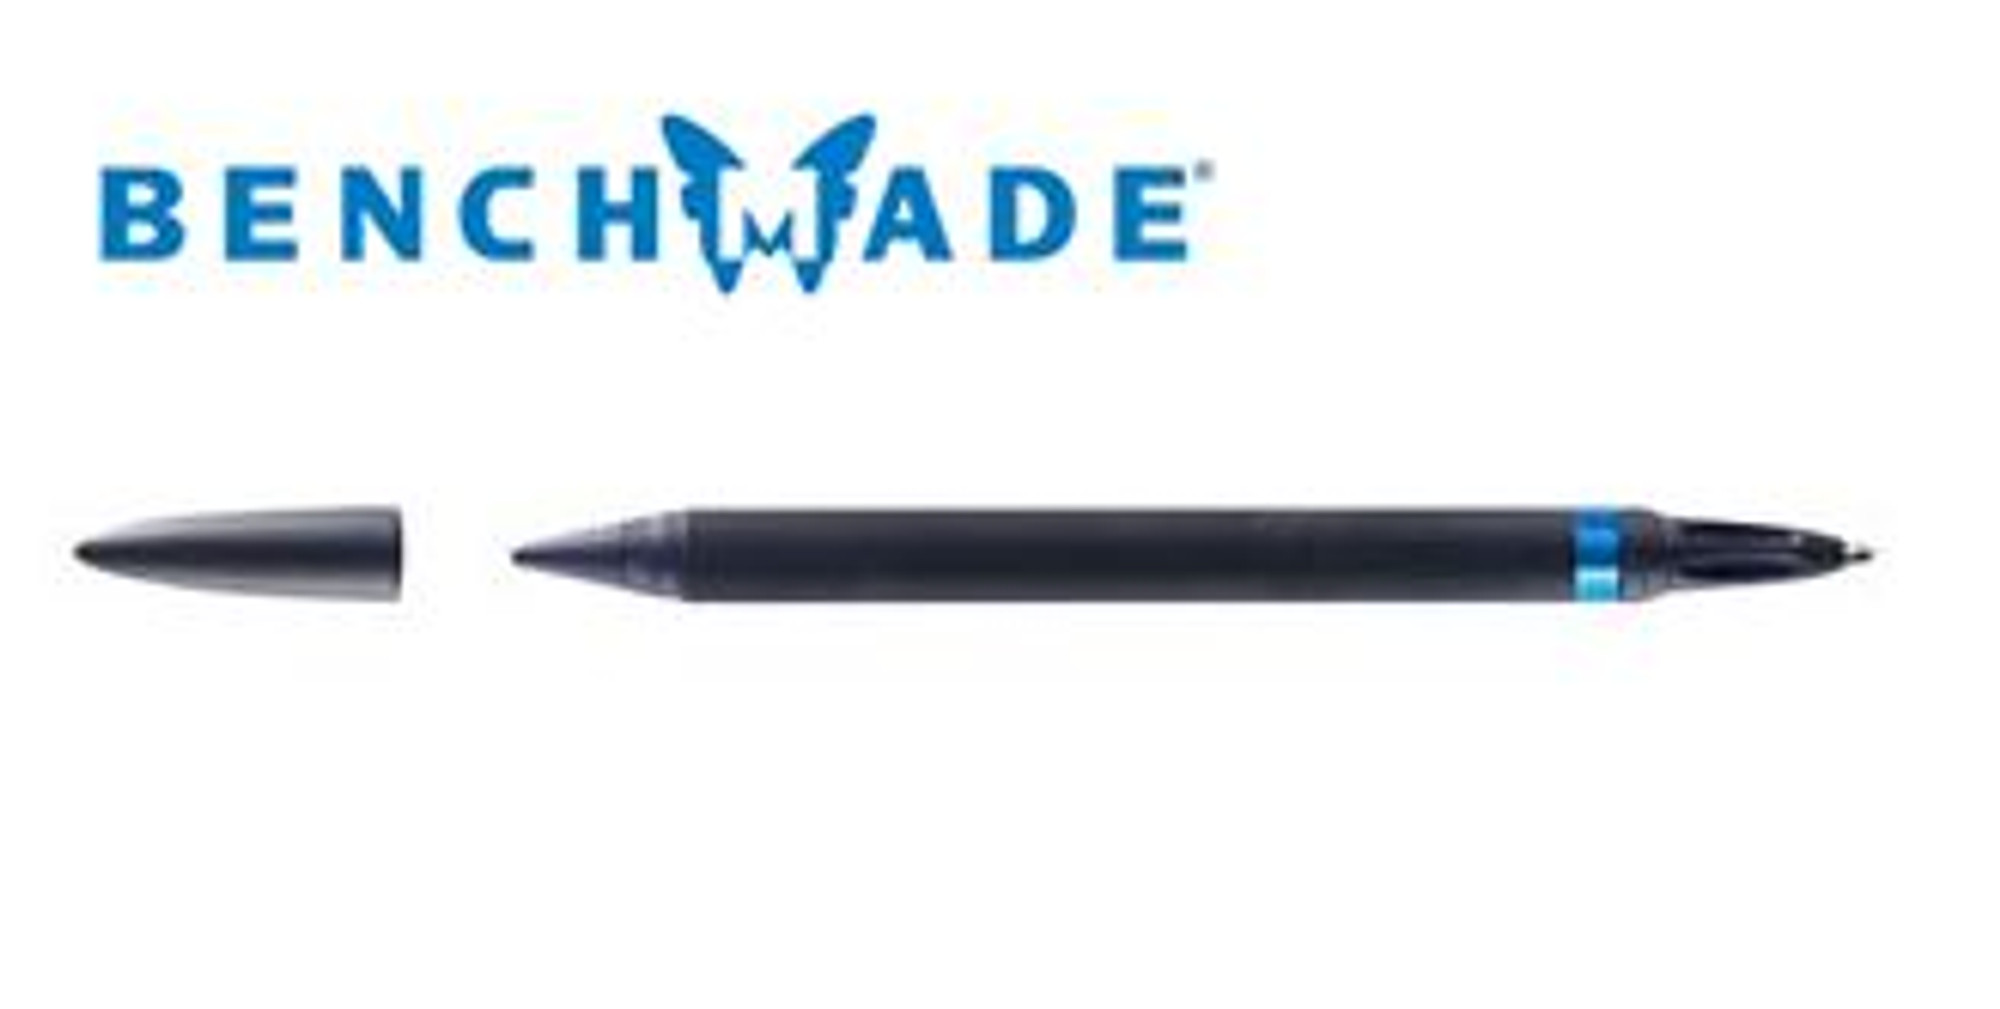 Benchmade 1200-3 Series Pen Blk Body - Blue Ink